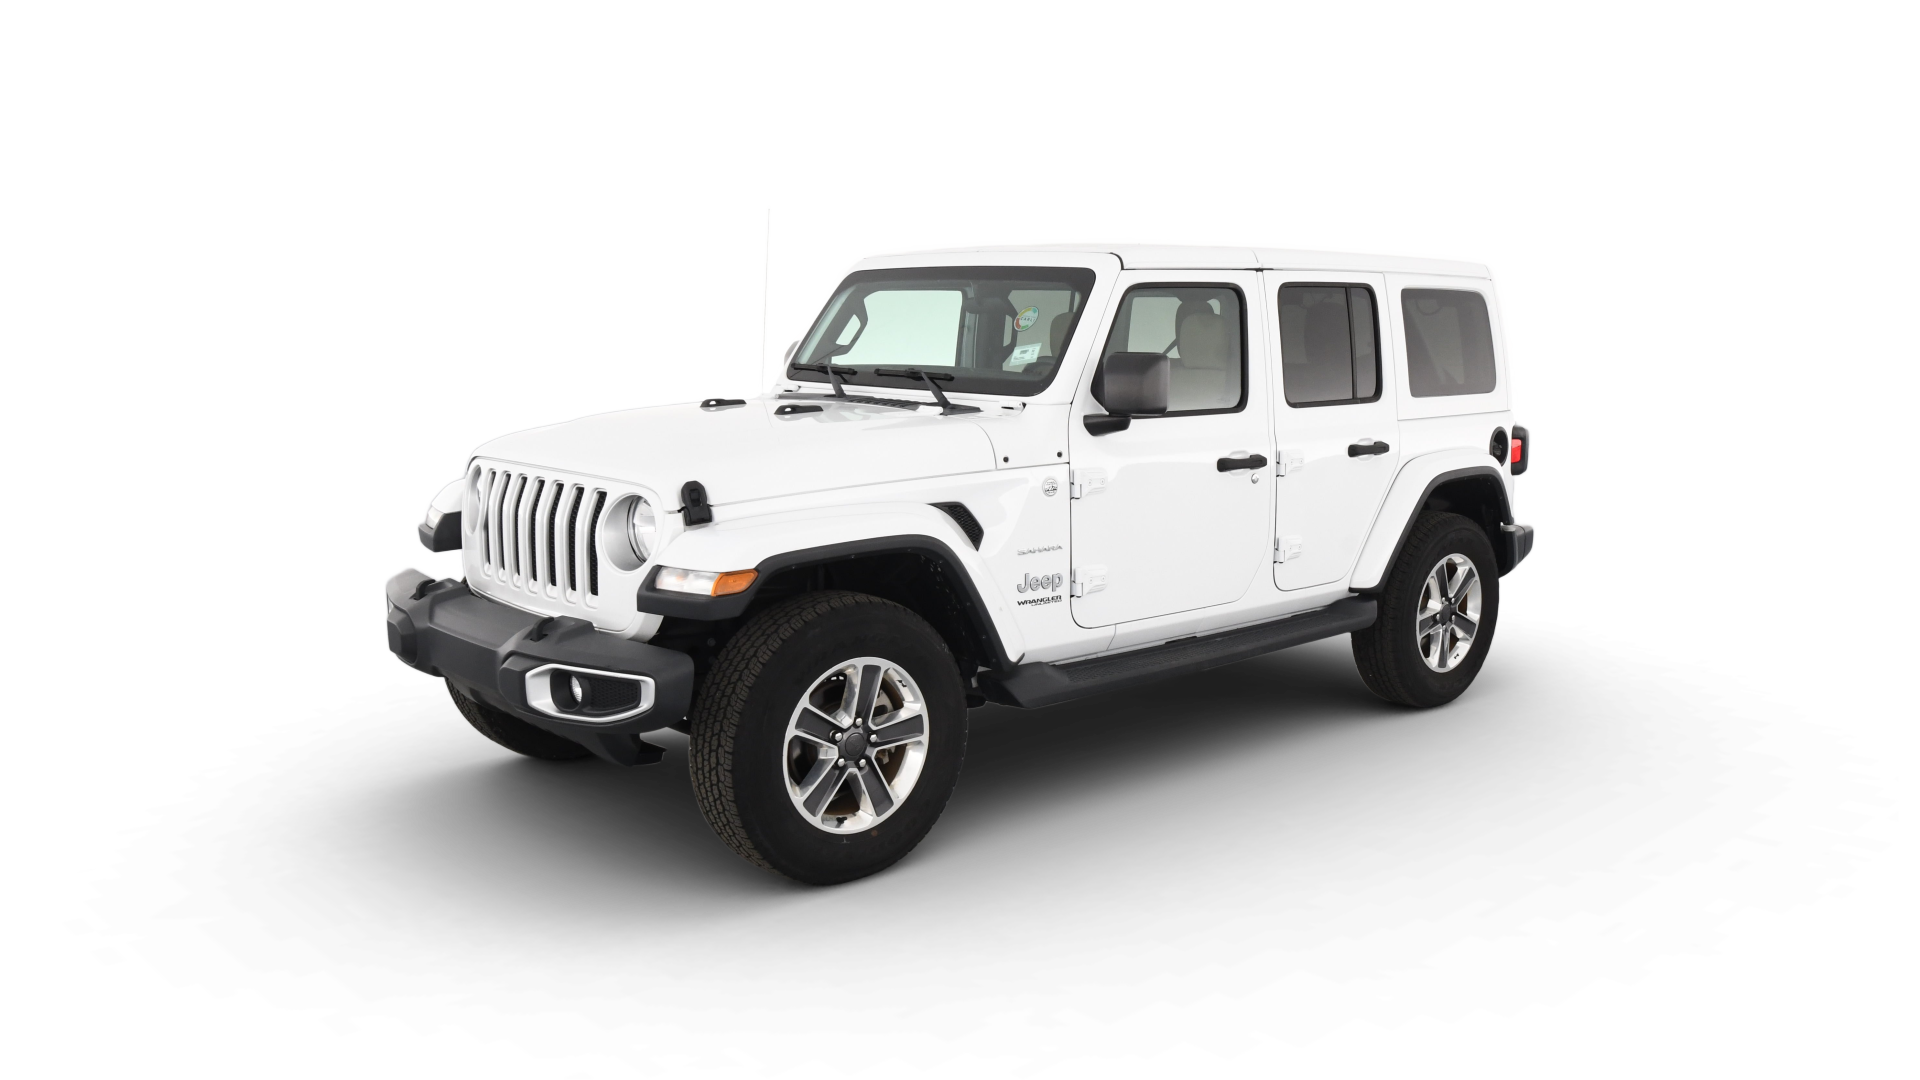 Jeep Wrangler Unlimited model image.